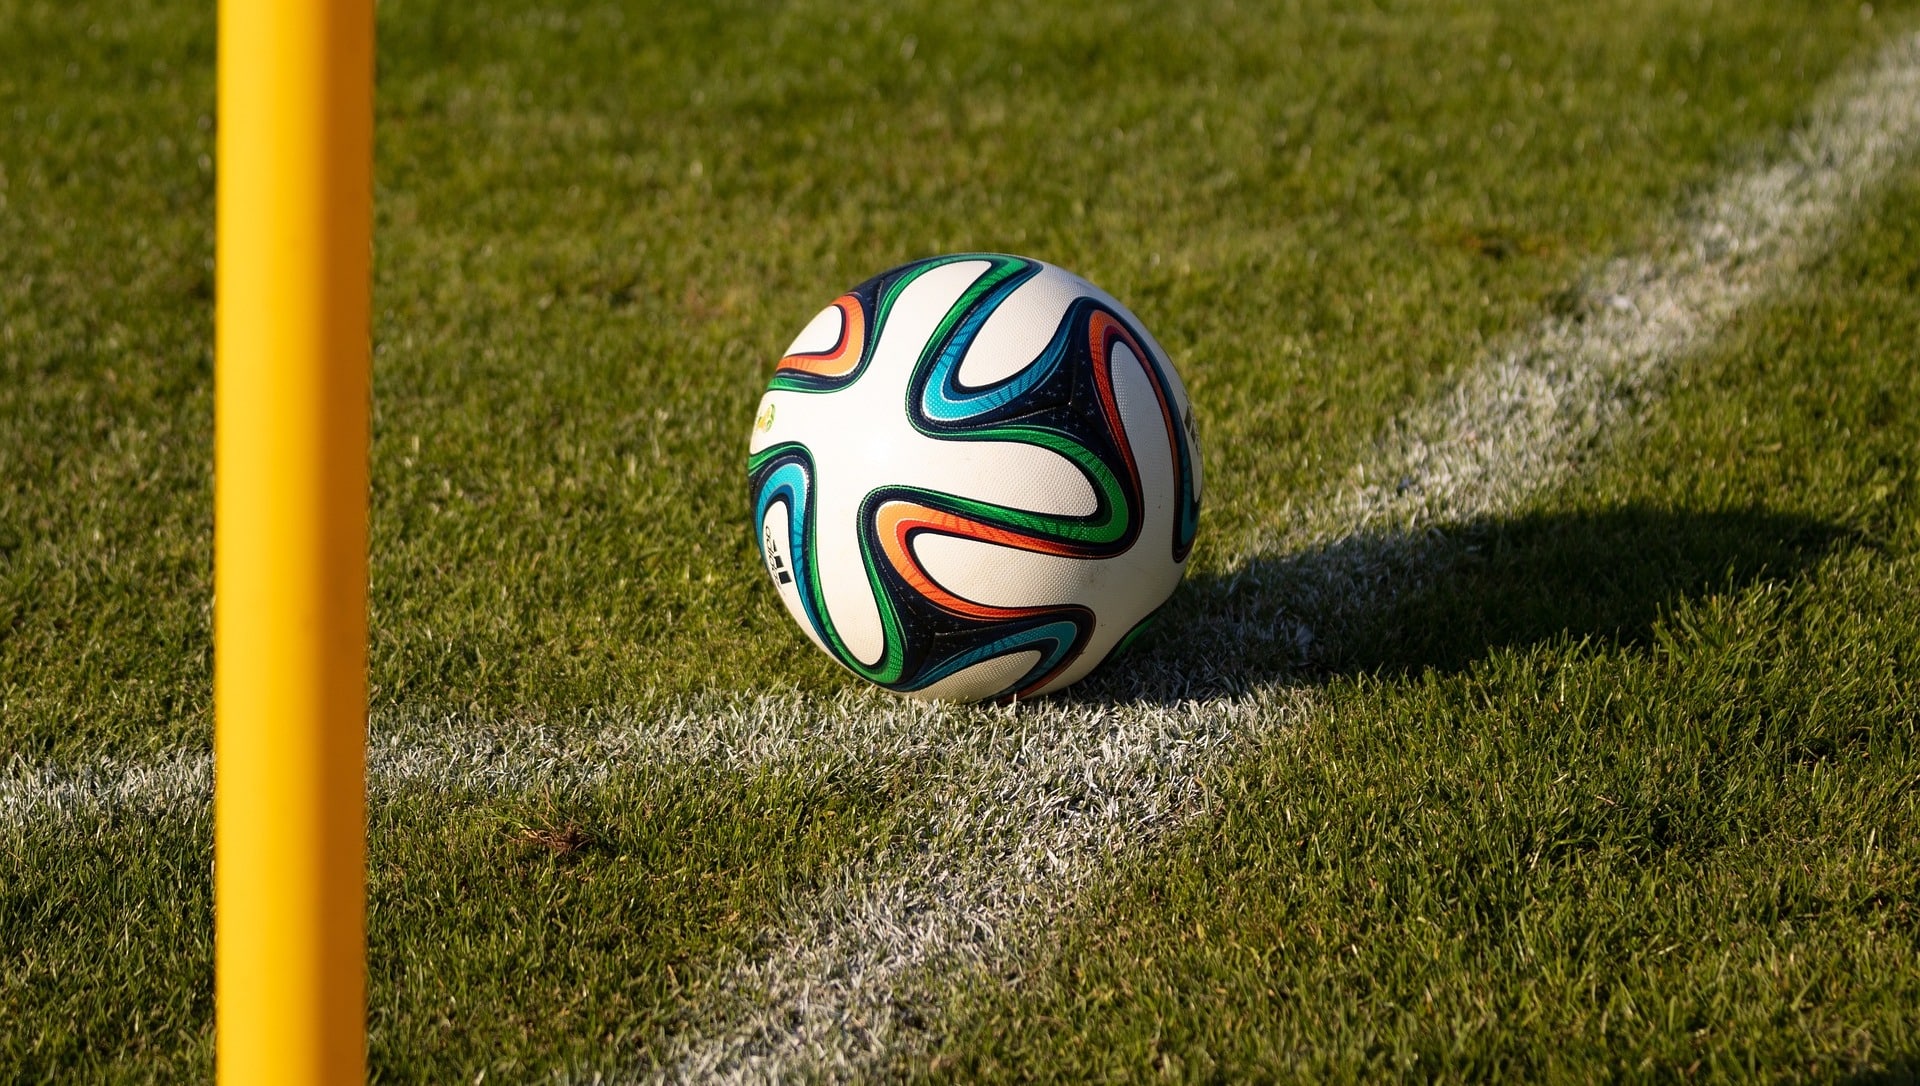 FIFA WORLD CUP KICKS OFF IN QATAR